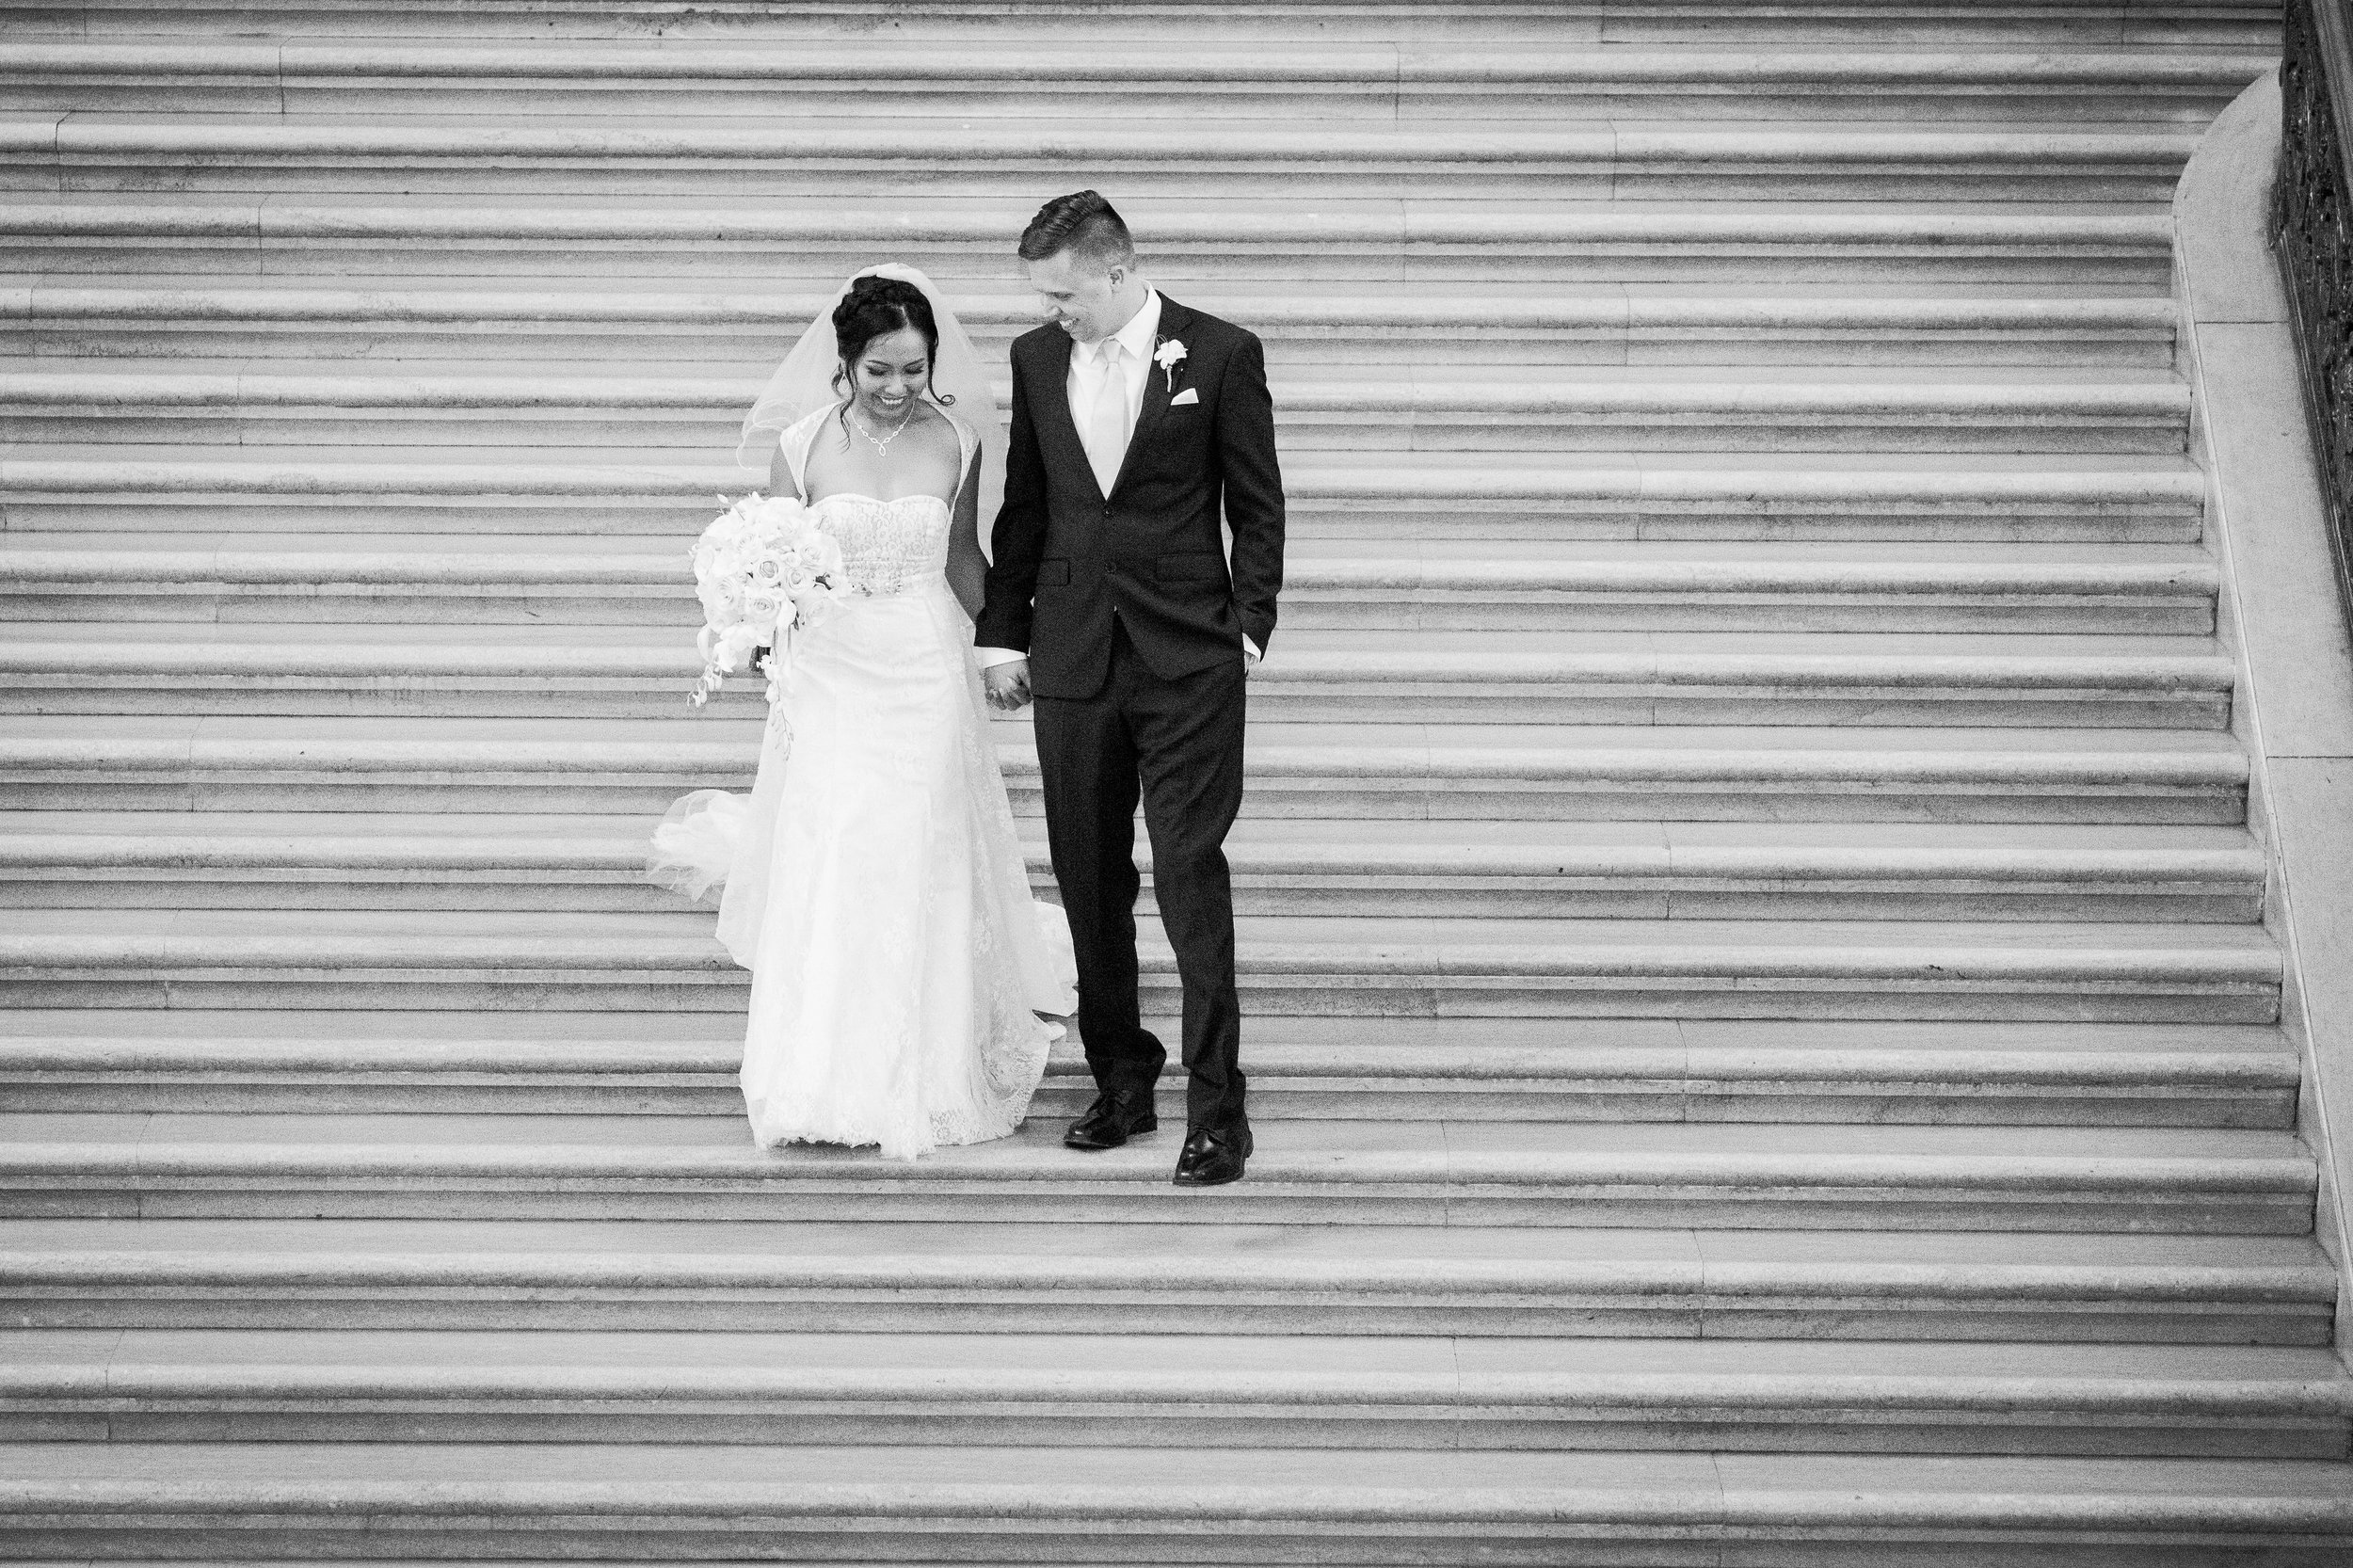 017_janaeshieldsphotography_sanfrancisco_cityhall_weddings.jpg